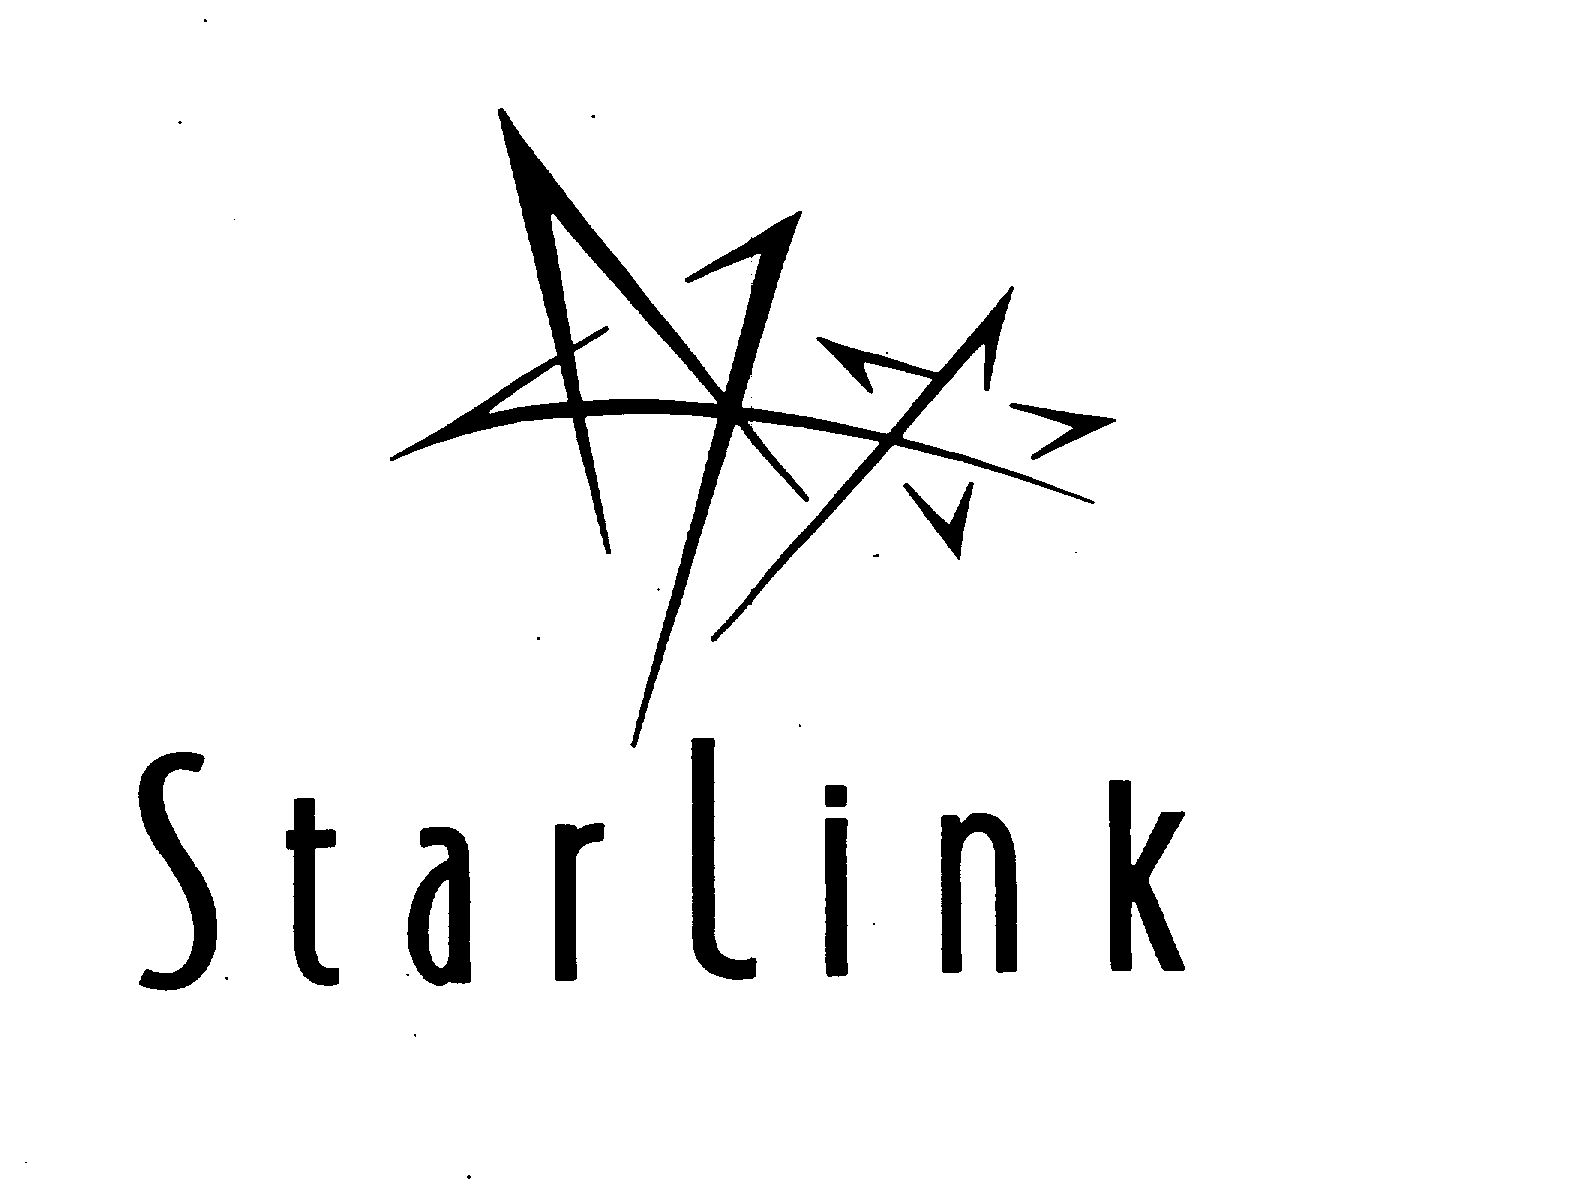 STARLINK